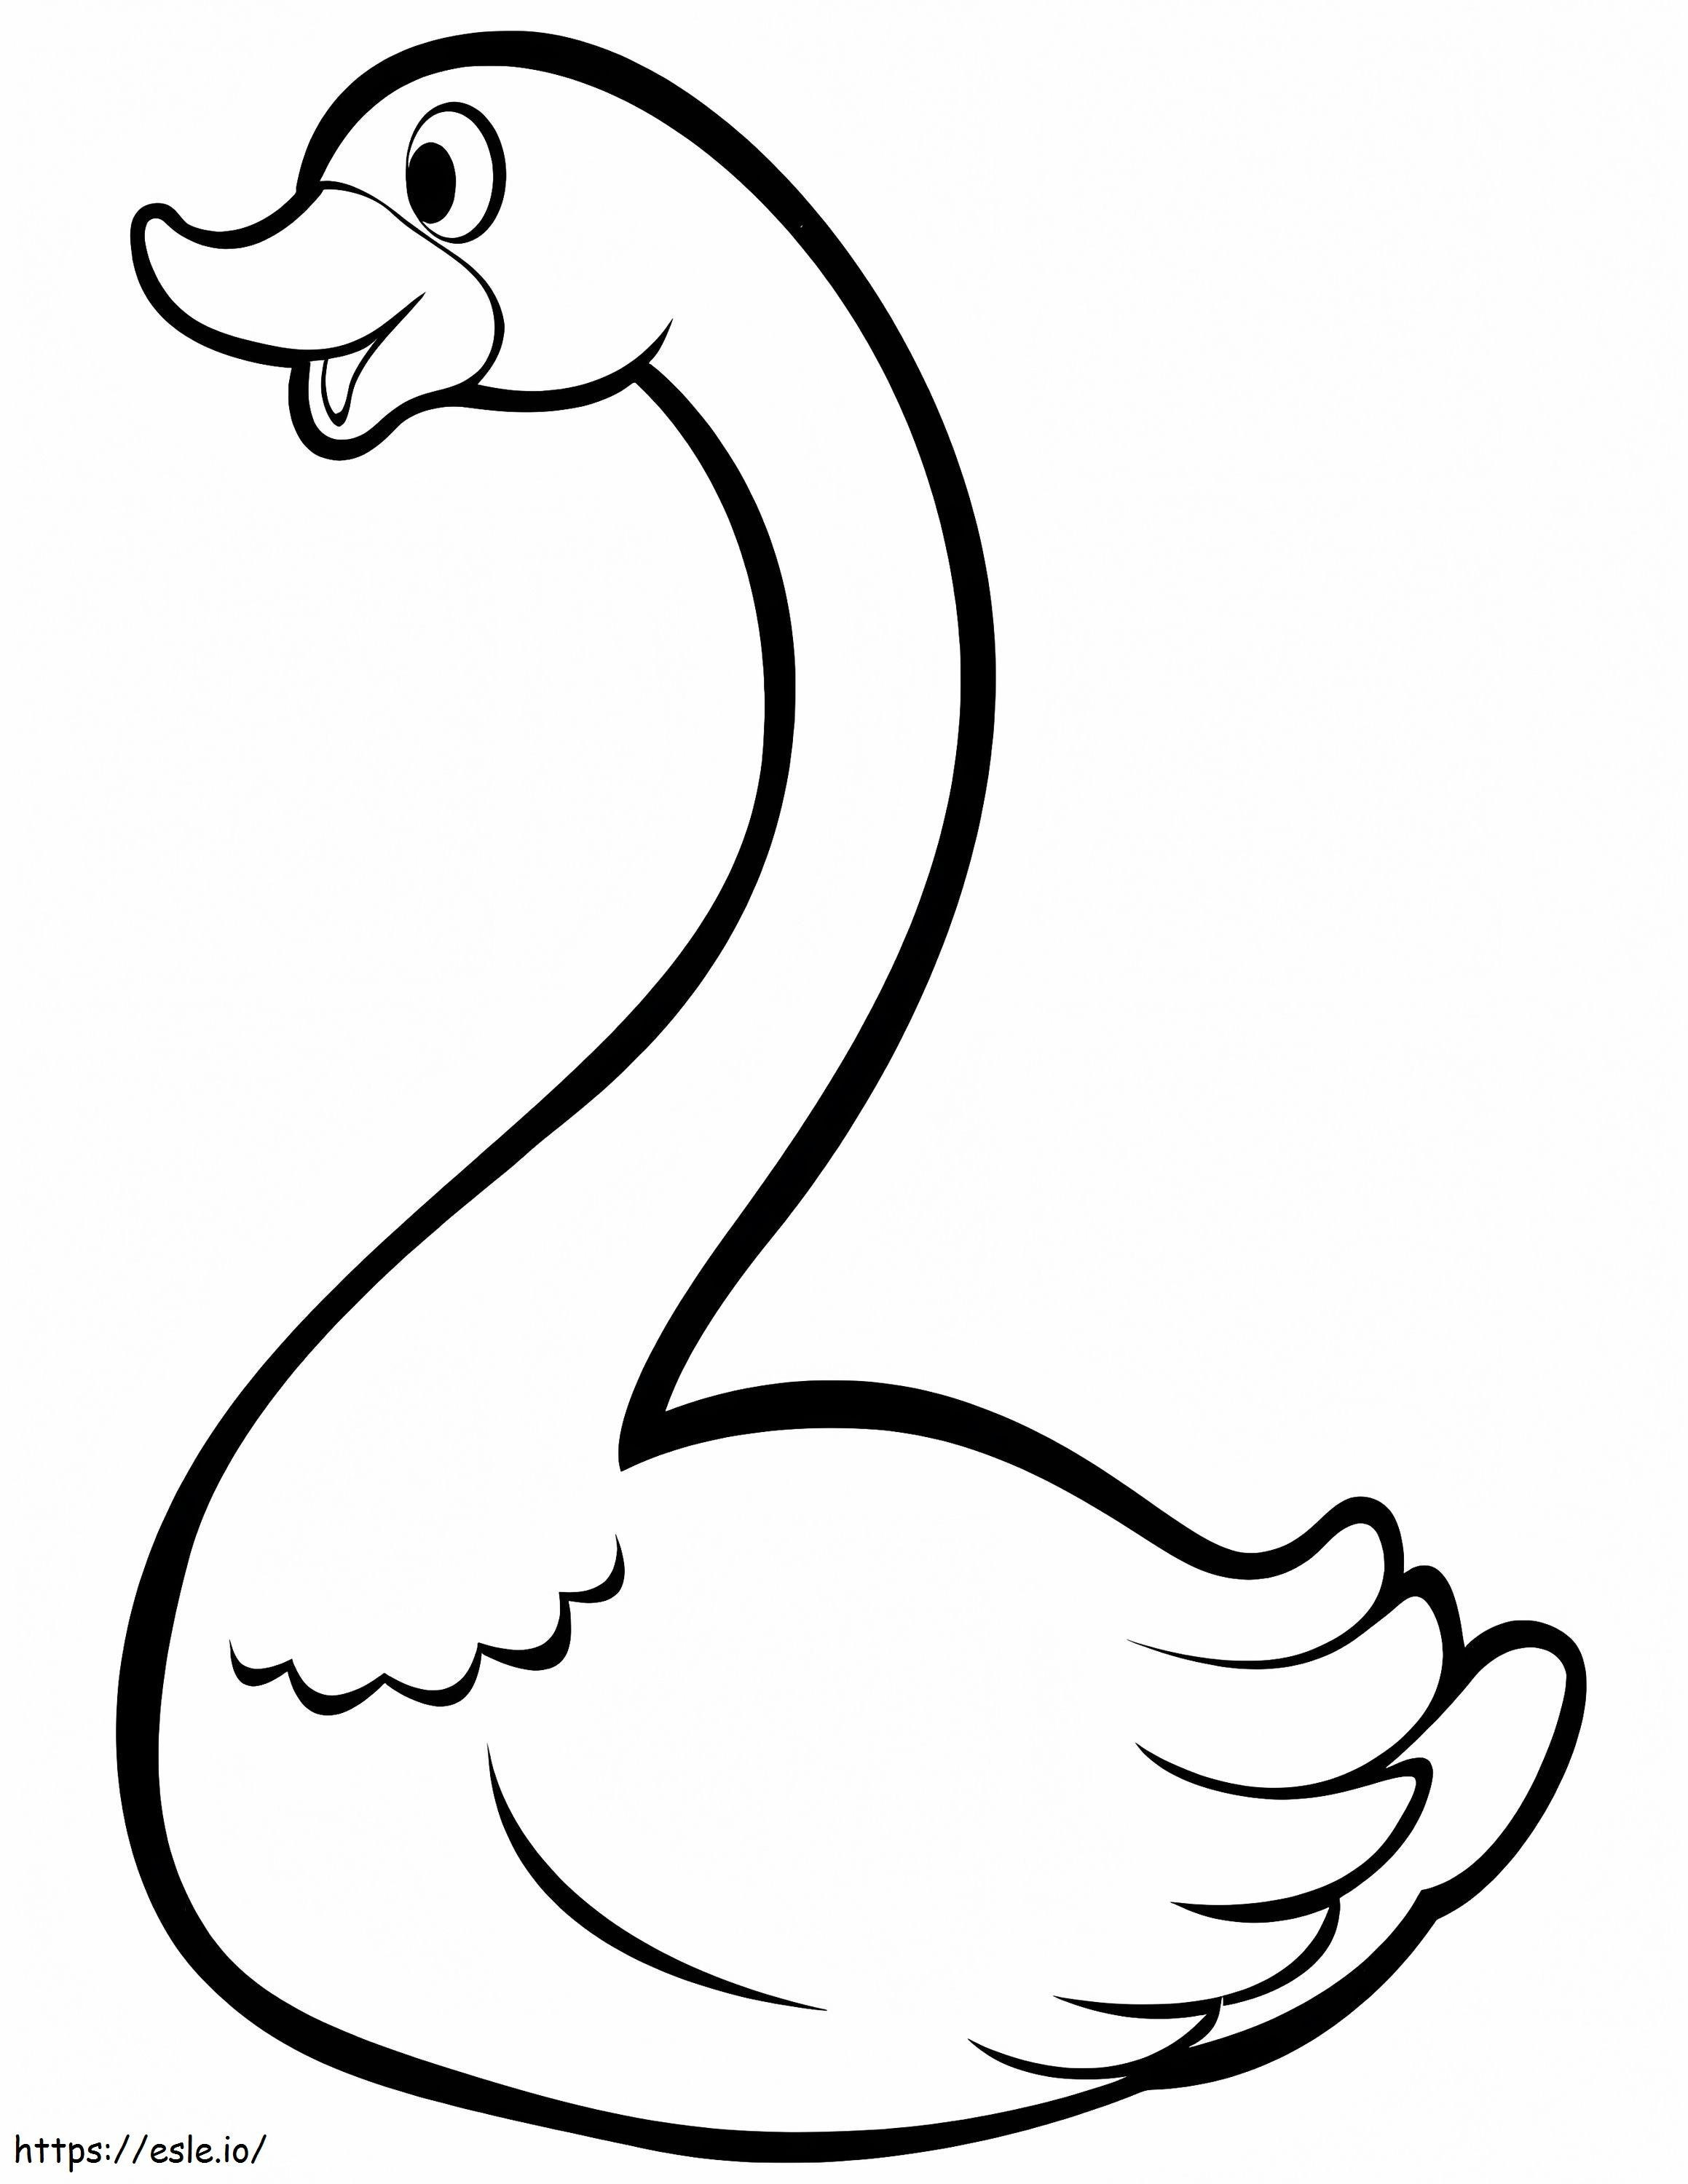 Happy Swan coloring page